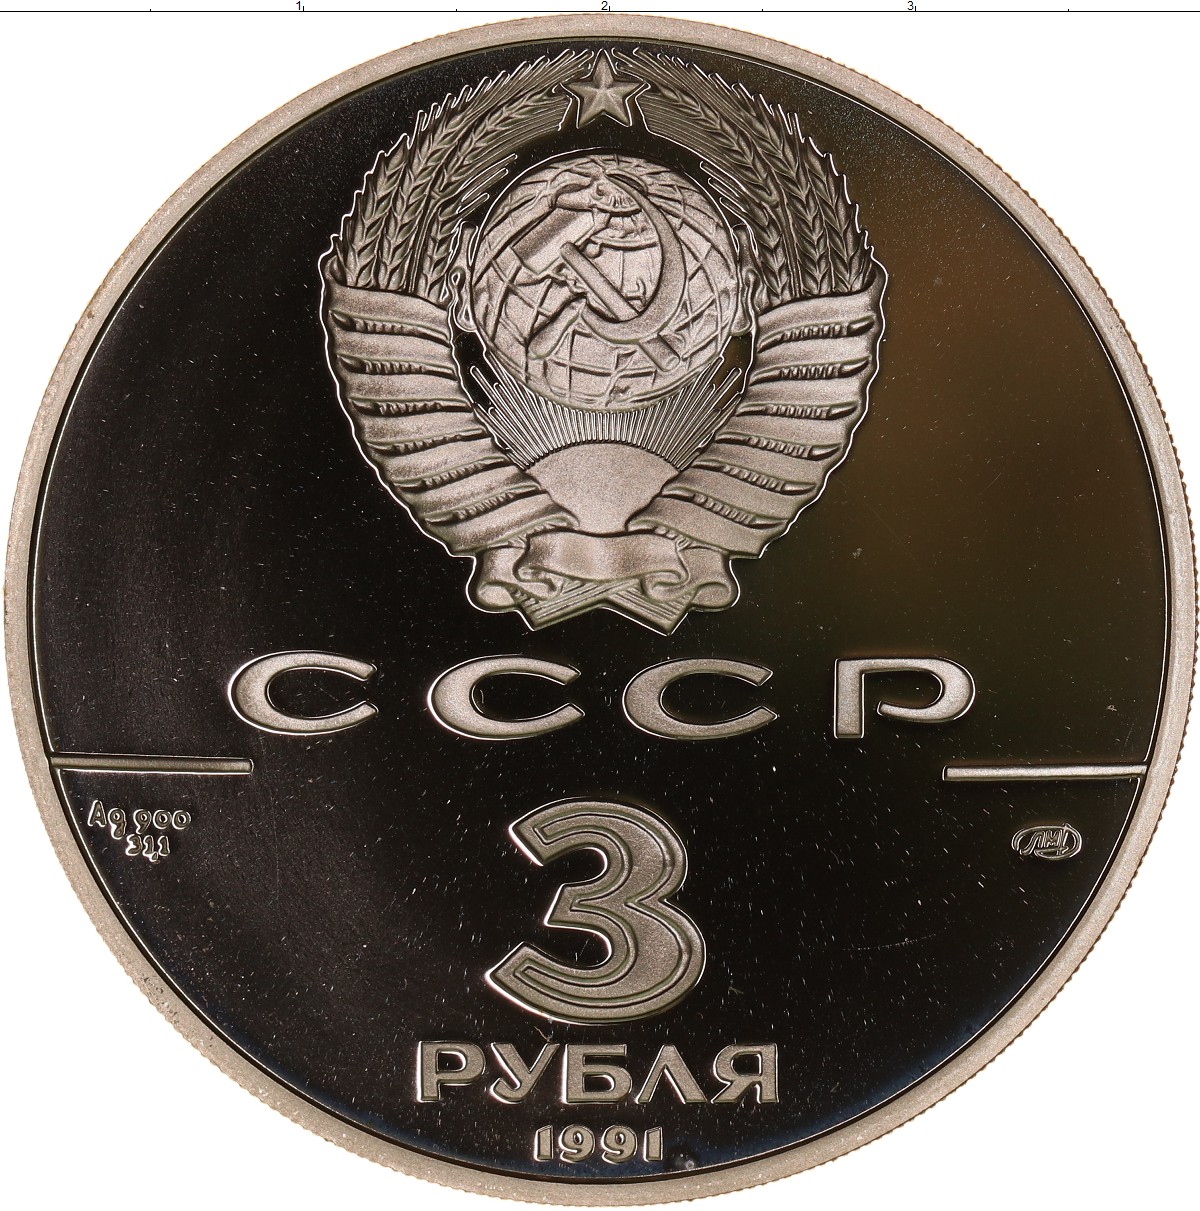 Новый три рубля. Монета 3 рубля. Советские 3 рубля. Три рубля монета СССР. Советские 3 рубля металлические.